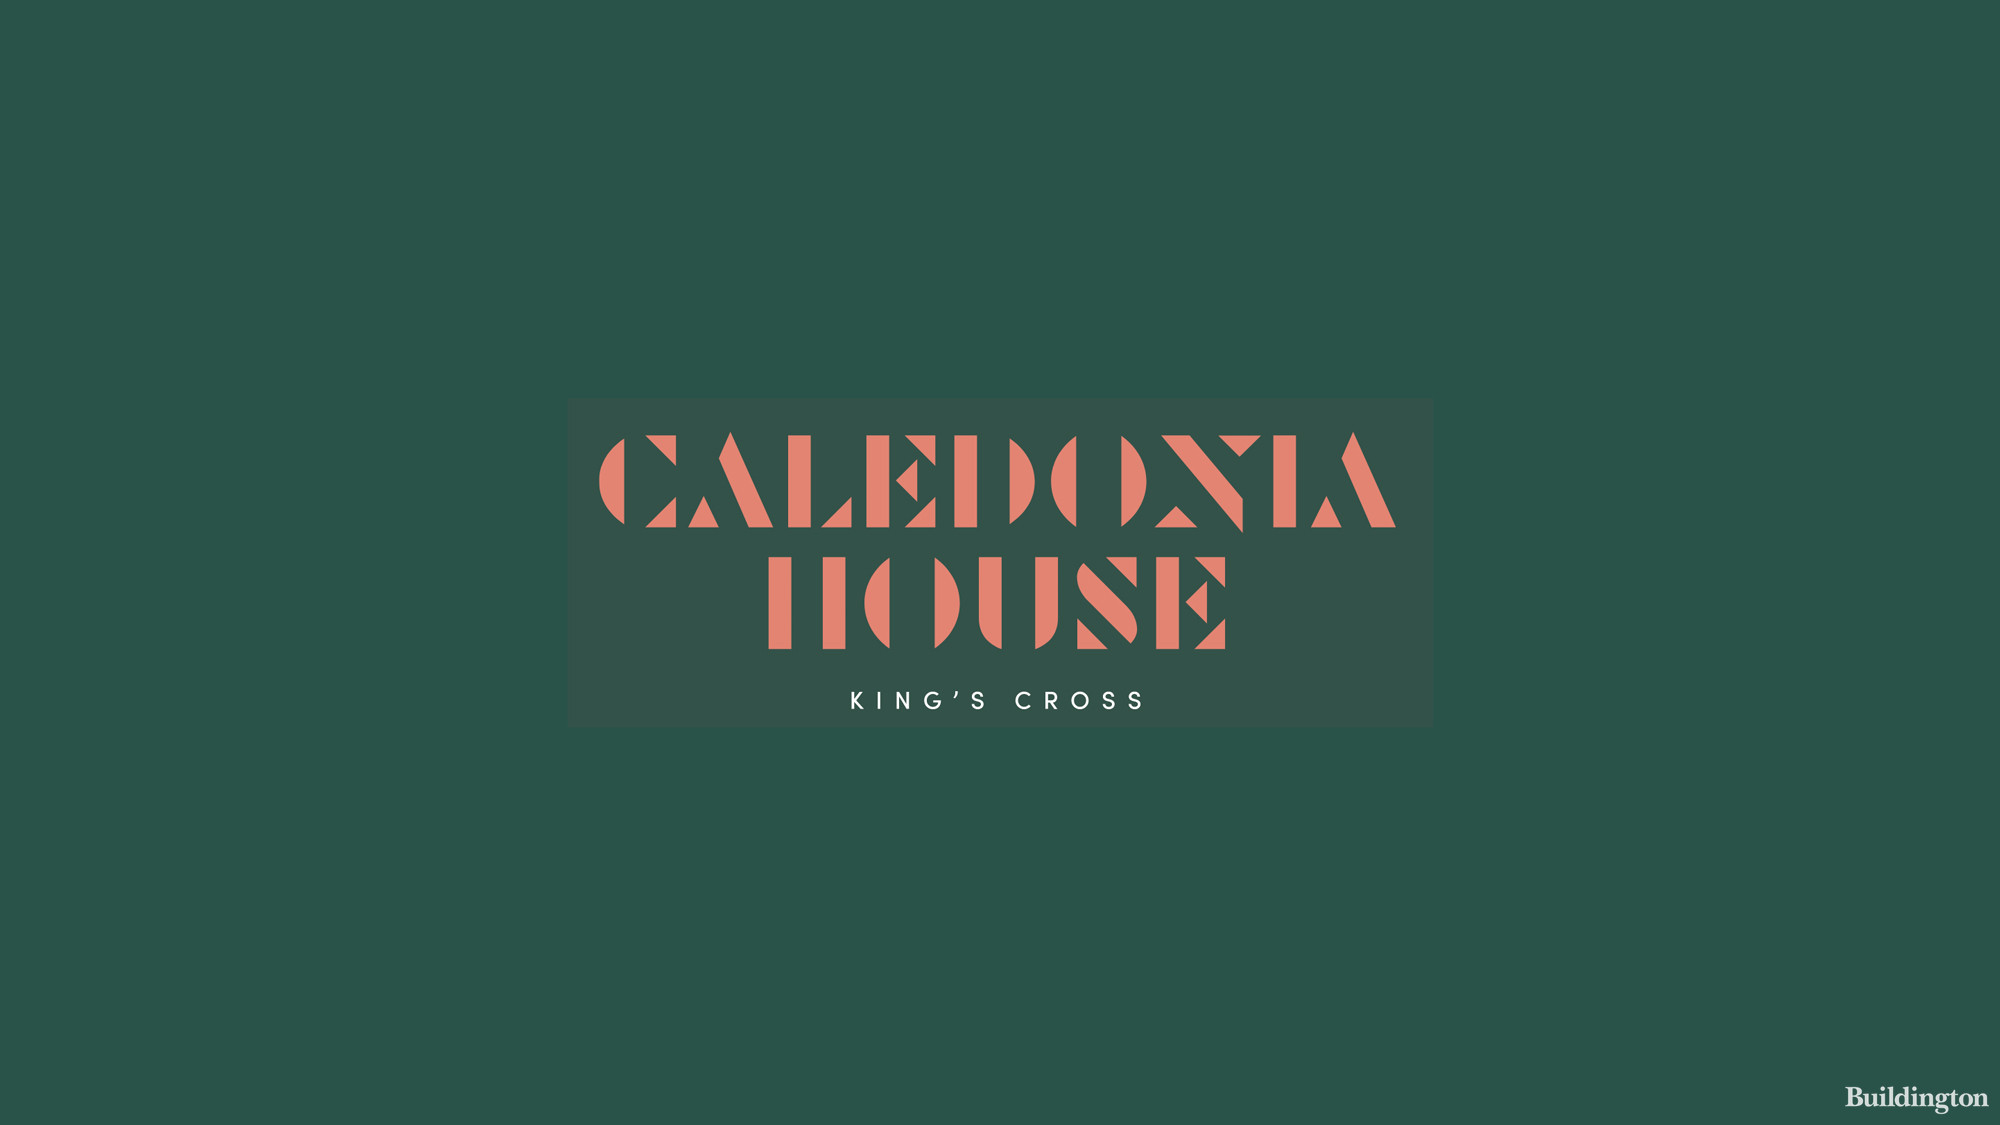 Logo of Caledonia House building in King's Cross, London N1.